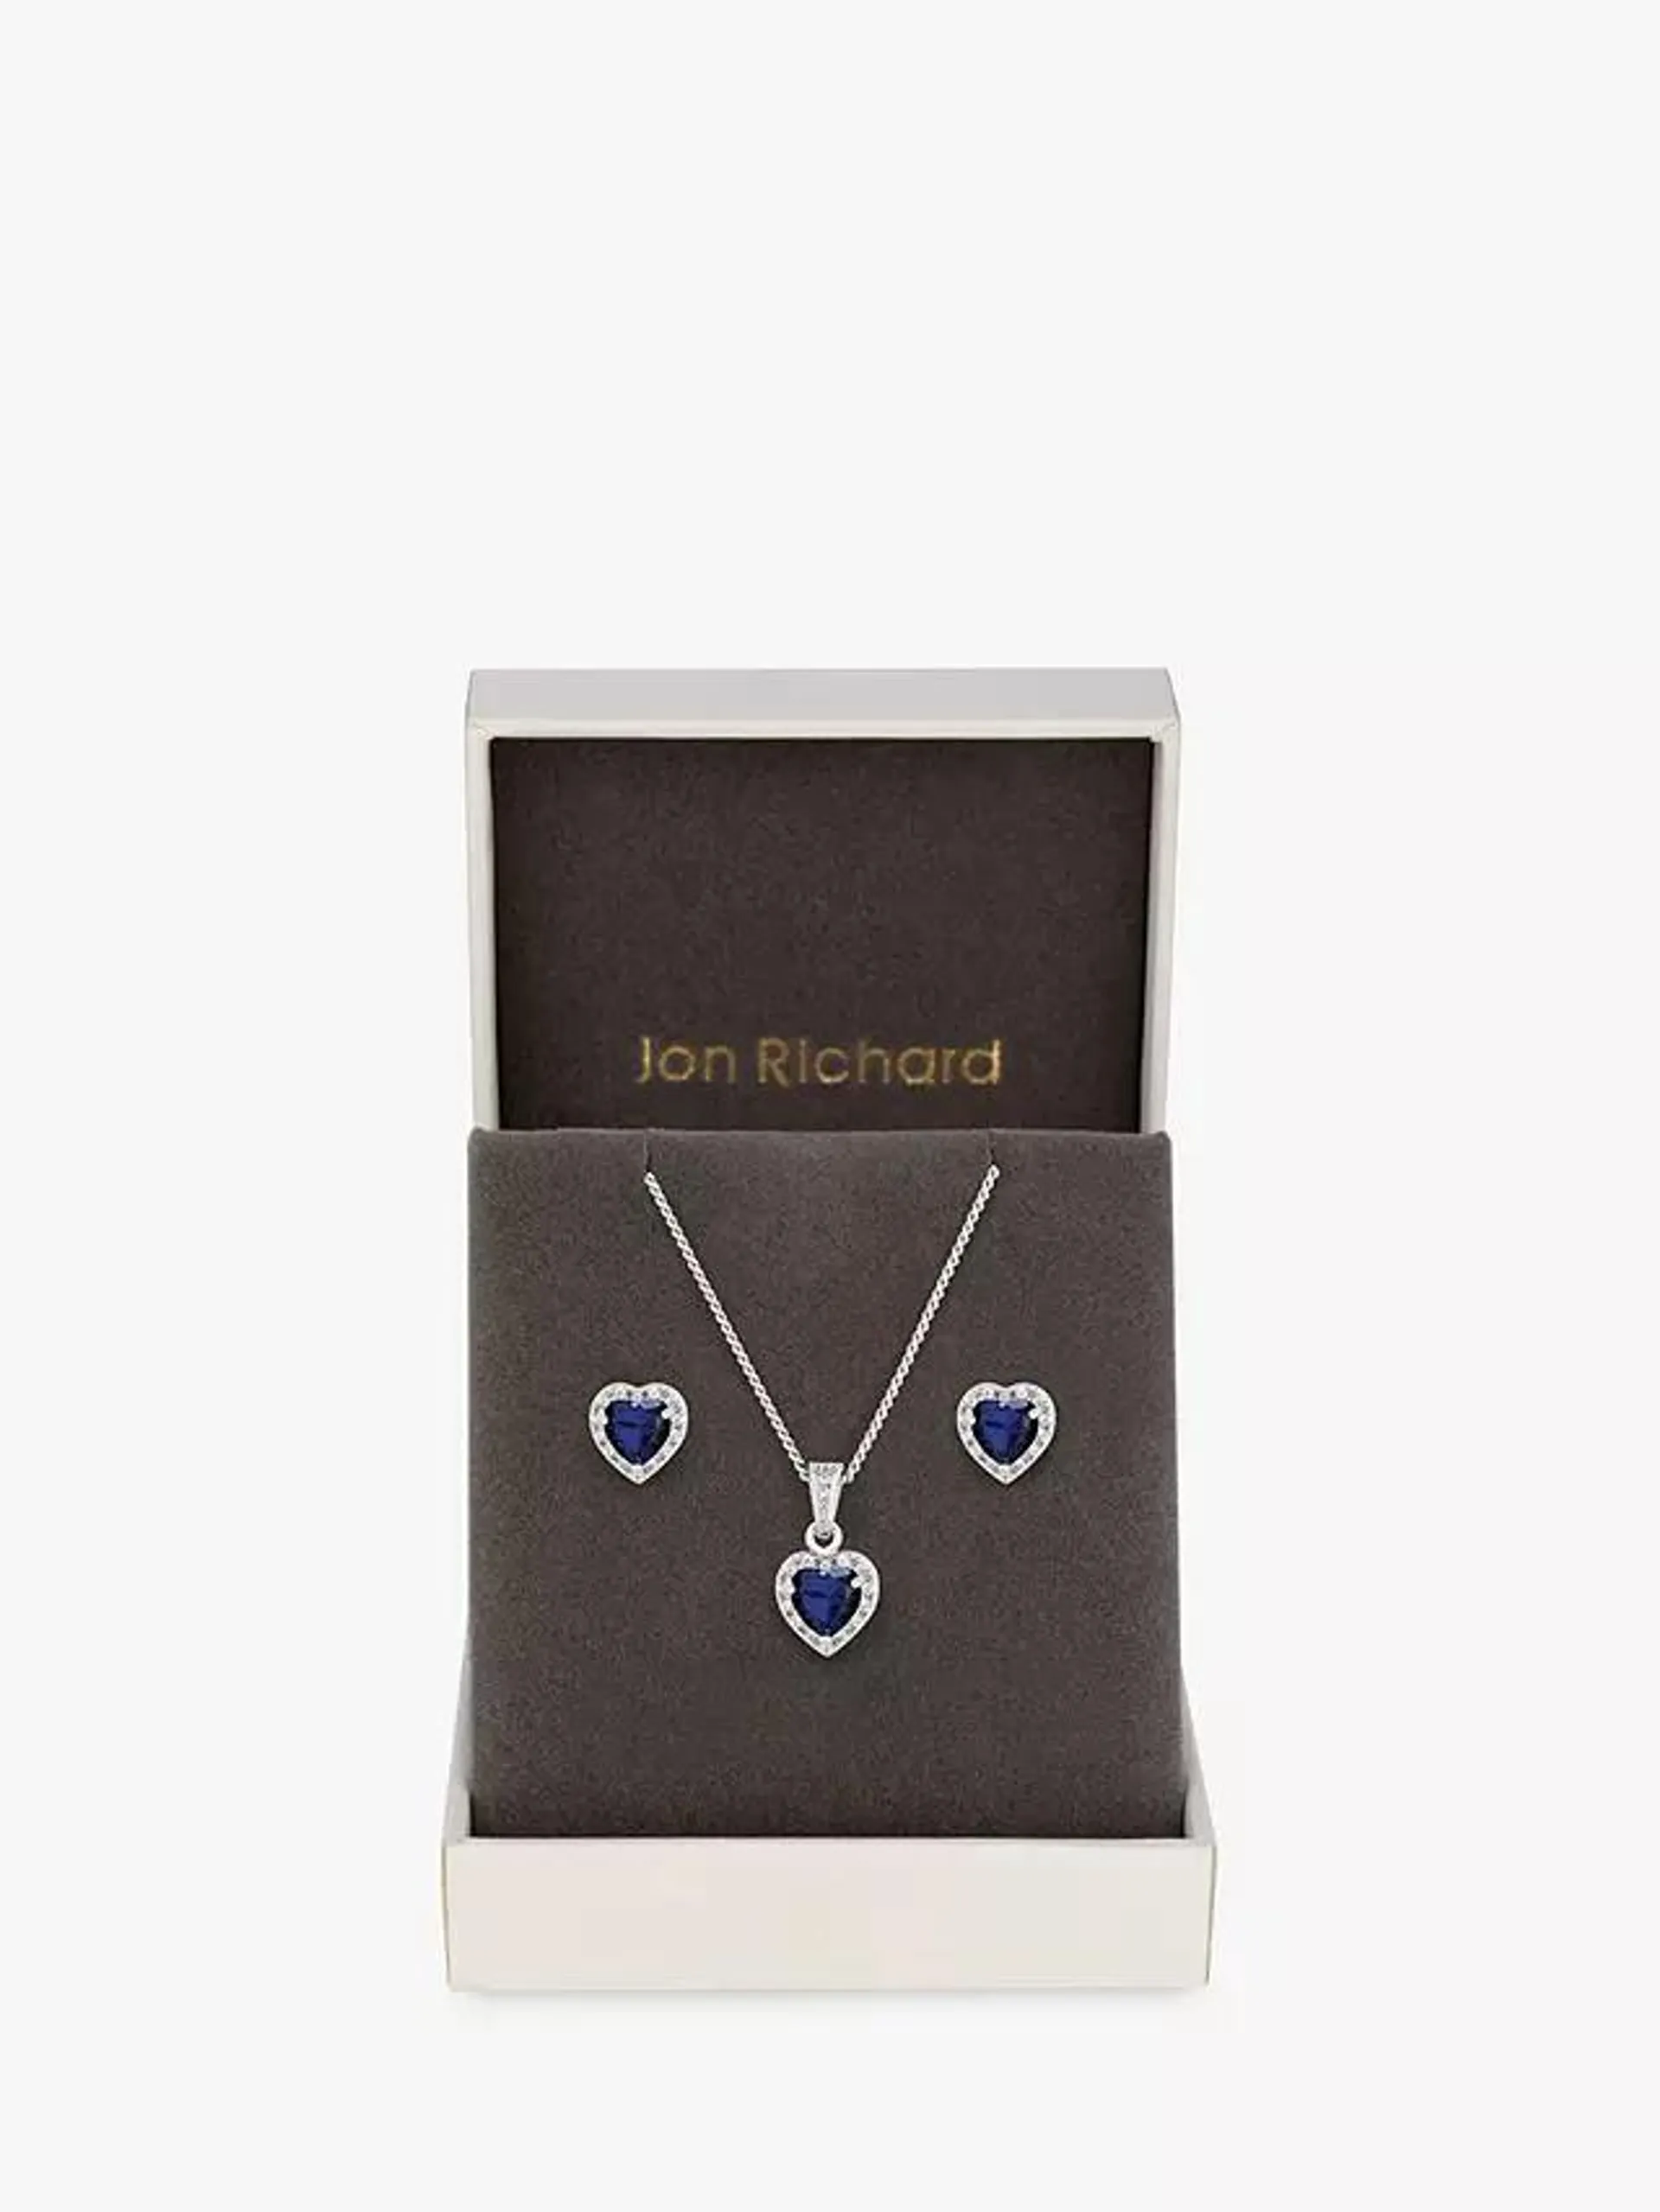 Jon Richard Cubic Zirconia Heart Pendant Necklace and Stud Earrings Jewellery Set, Silver/Blue